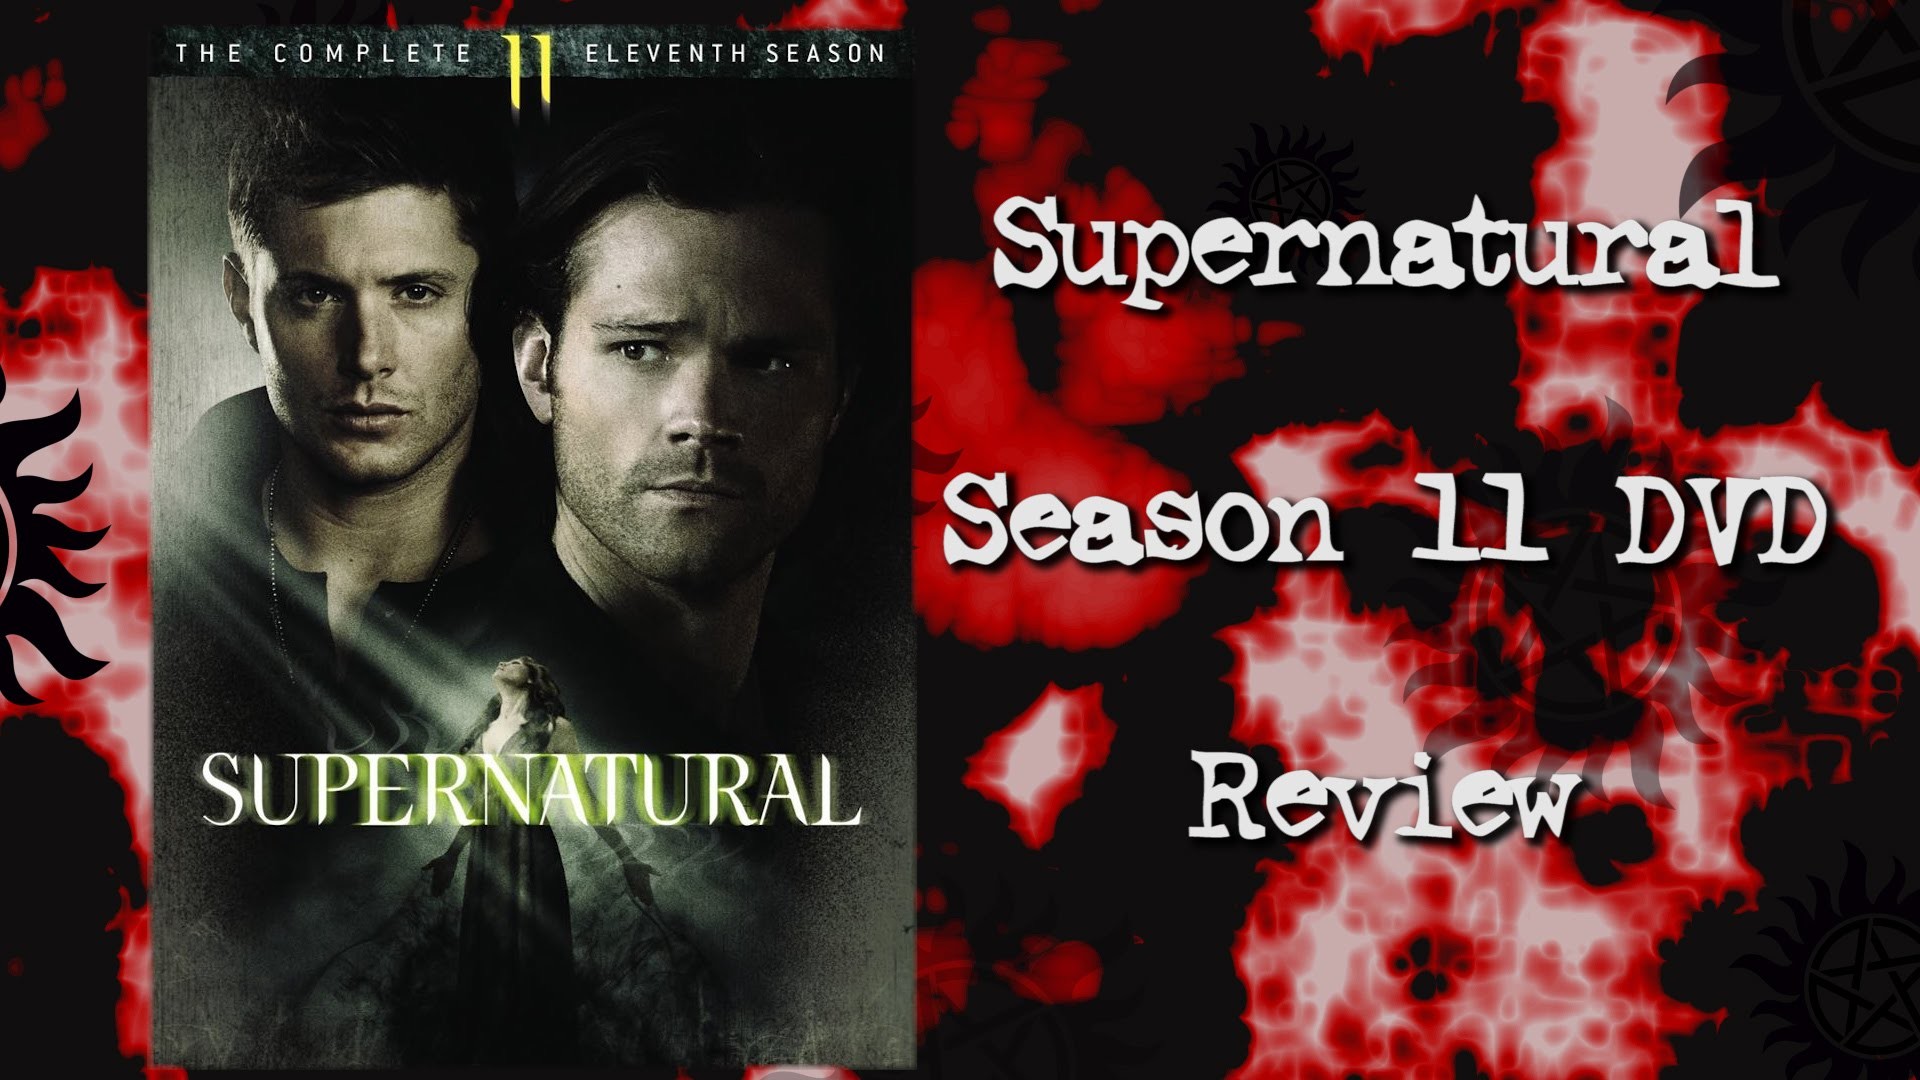 1920x1080 Supernatural Season 11 DVD Review